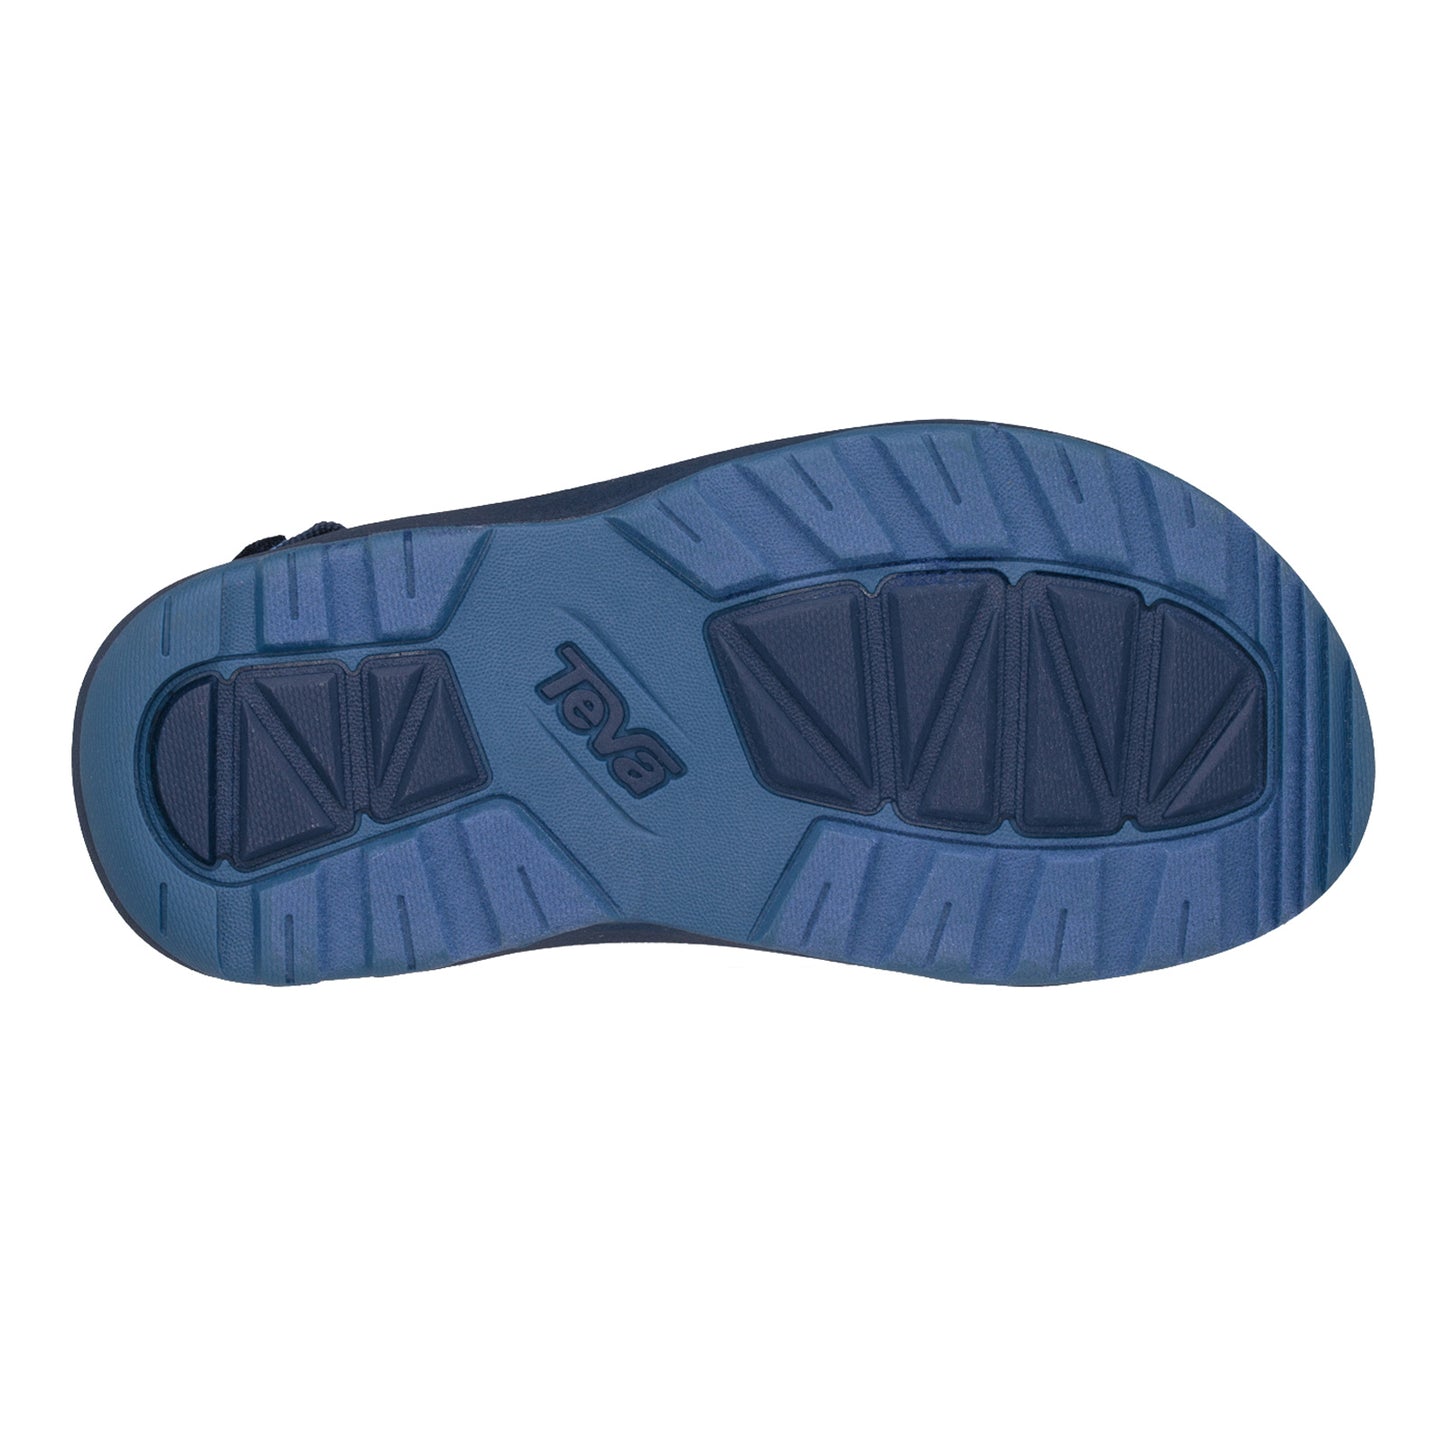 Peltz Shoes  Boy's Teva Hurricane XLT2 Sandal - Big Kid DARK BLUE 1019390Y-KDBL